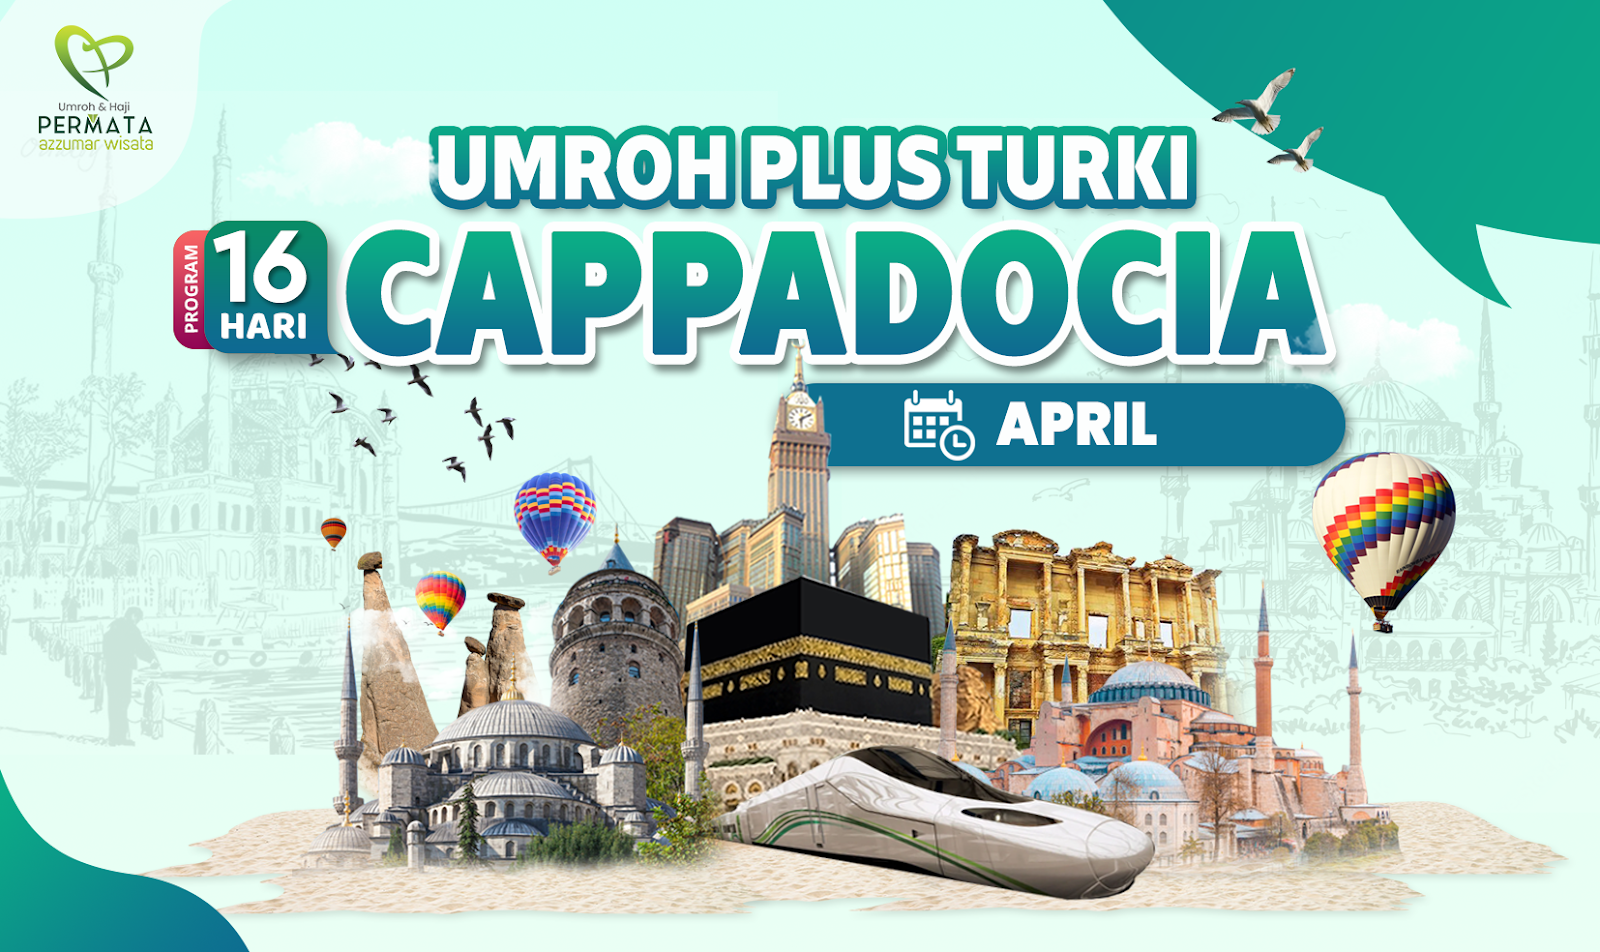 Biaya Umroh Plus Turki Bursa Cappadocia 16 Hari Syawal Lebaran